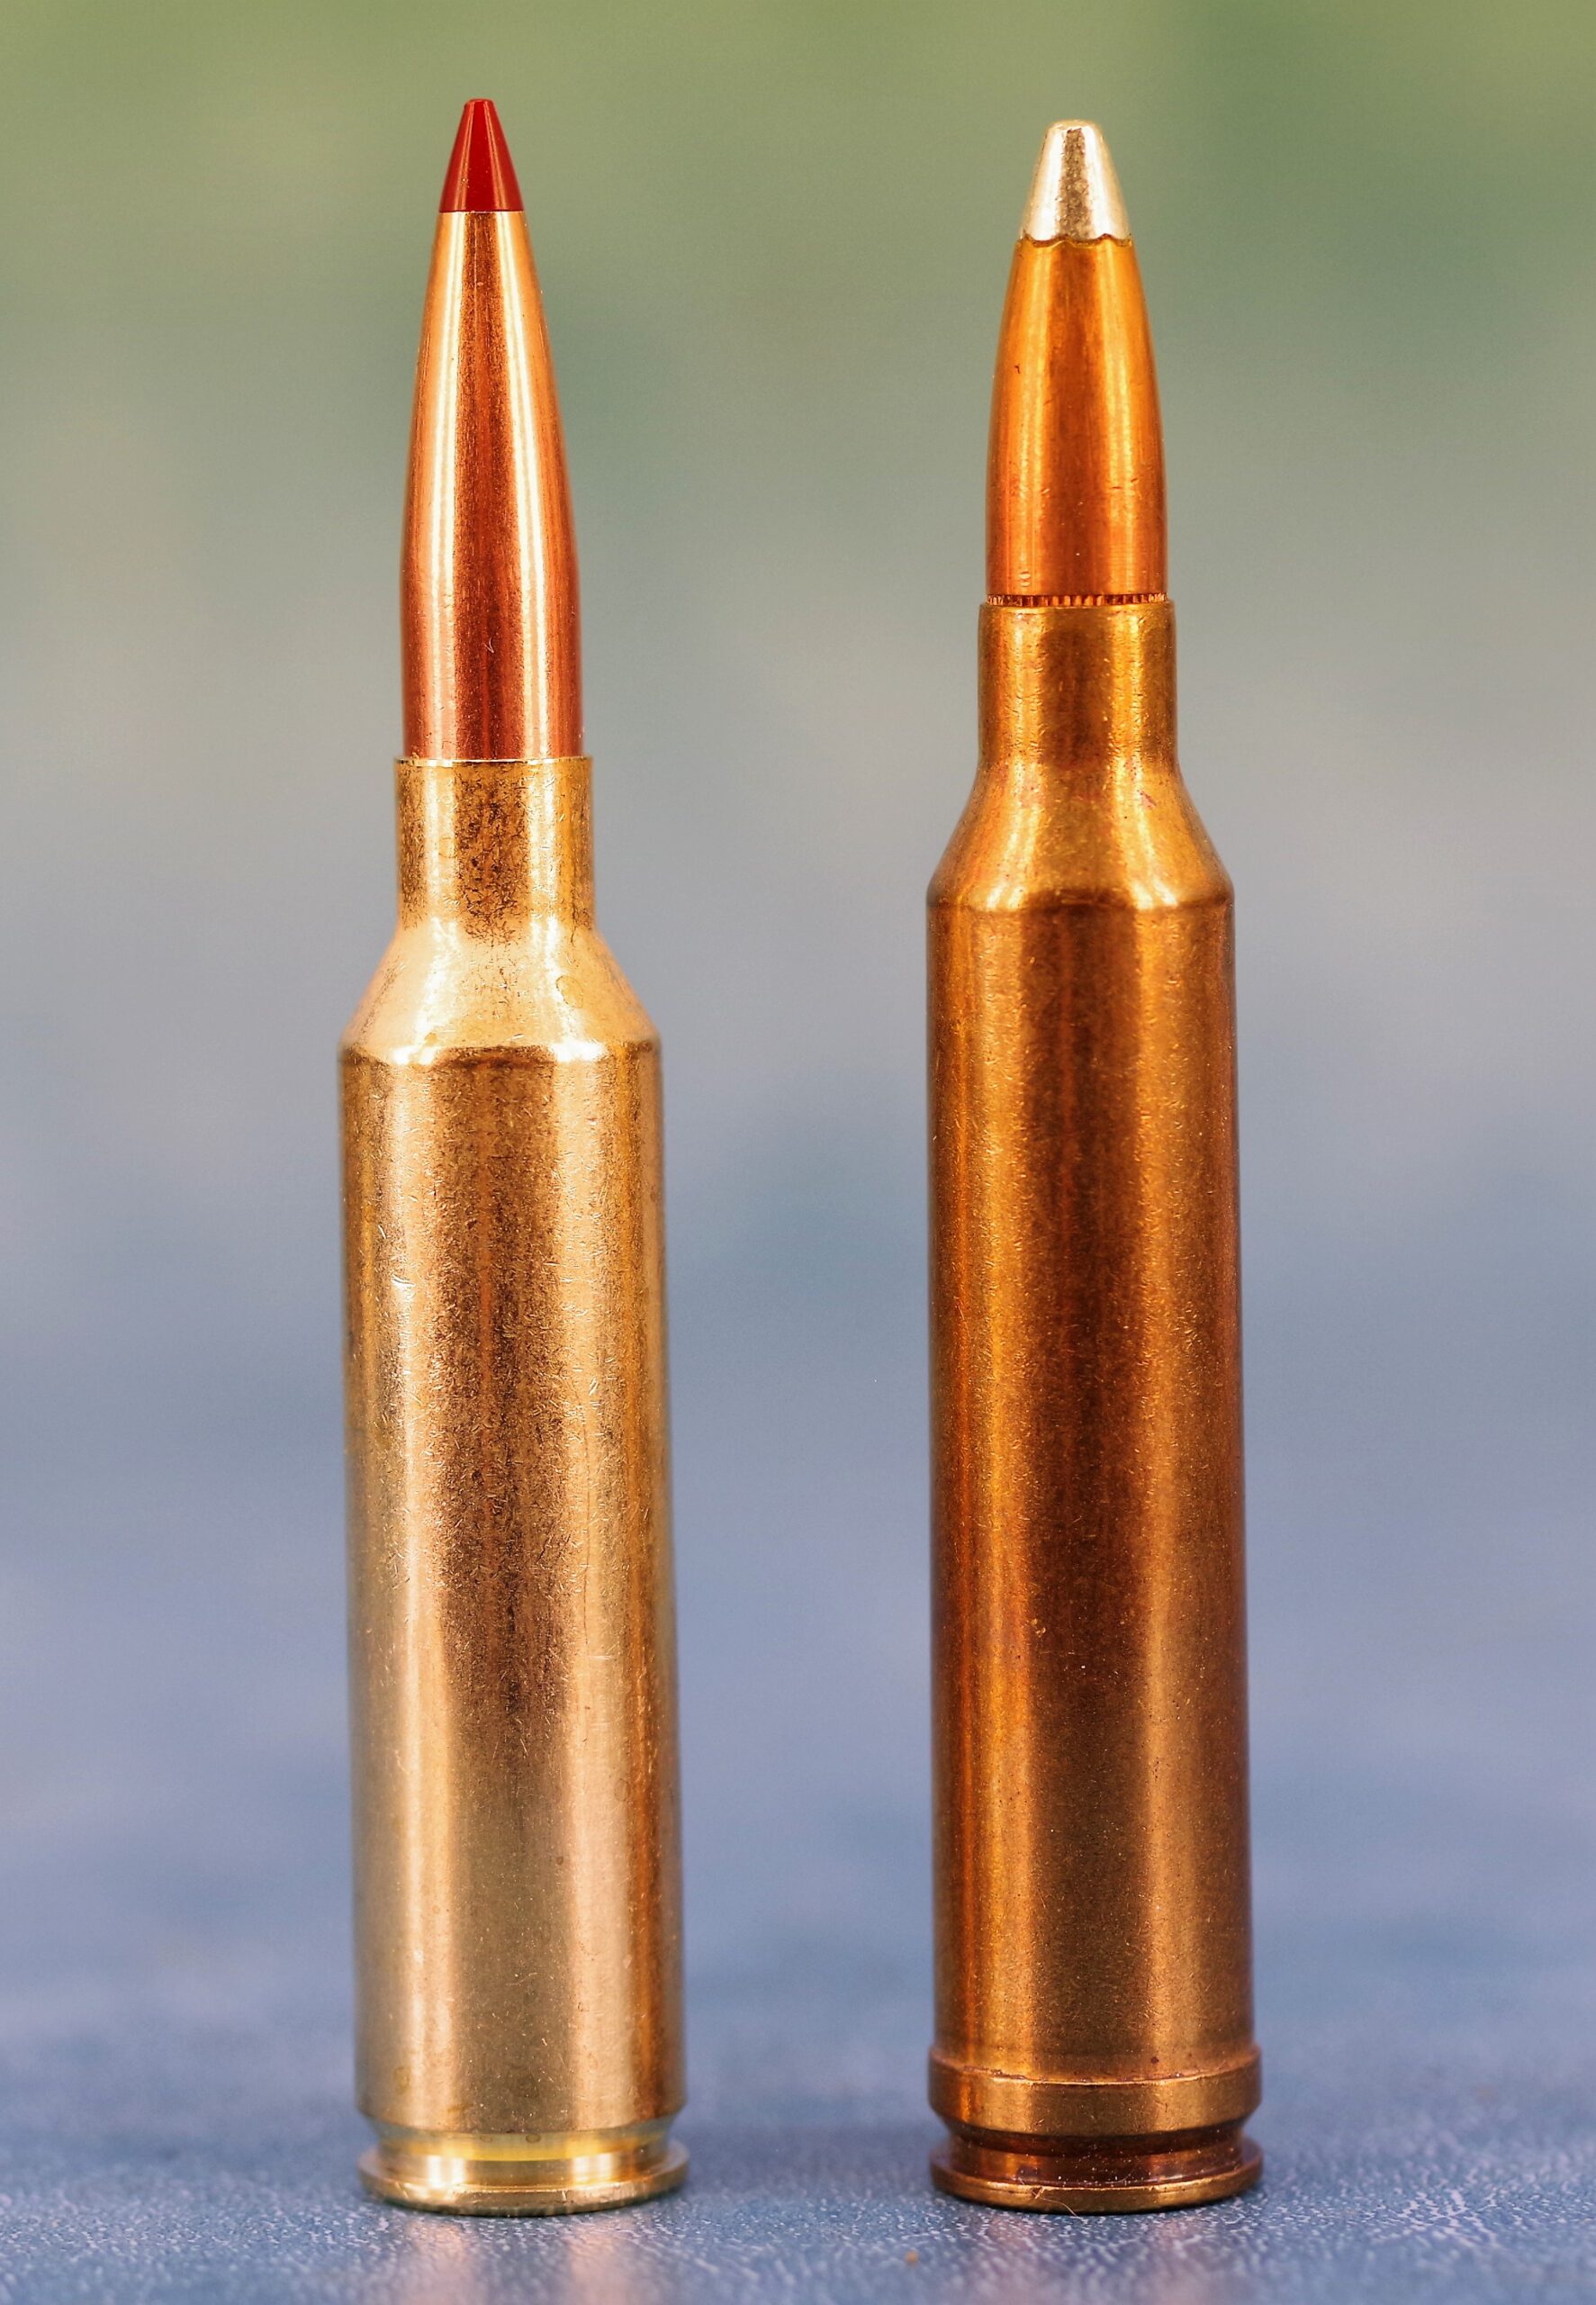 30 06 ammo vs 7mm